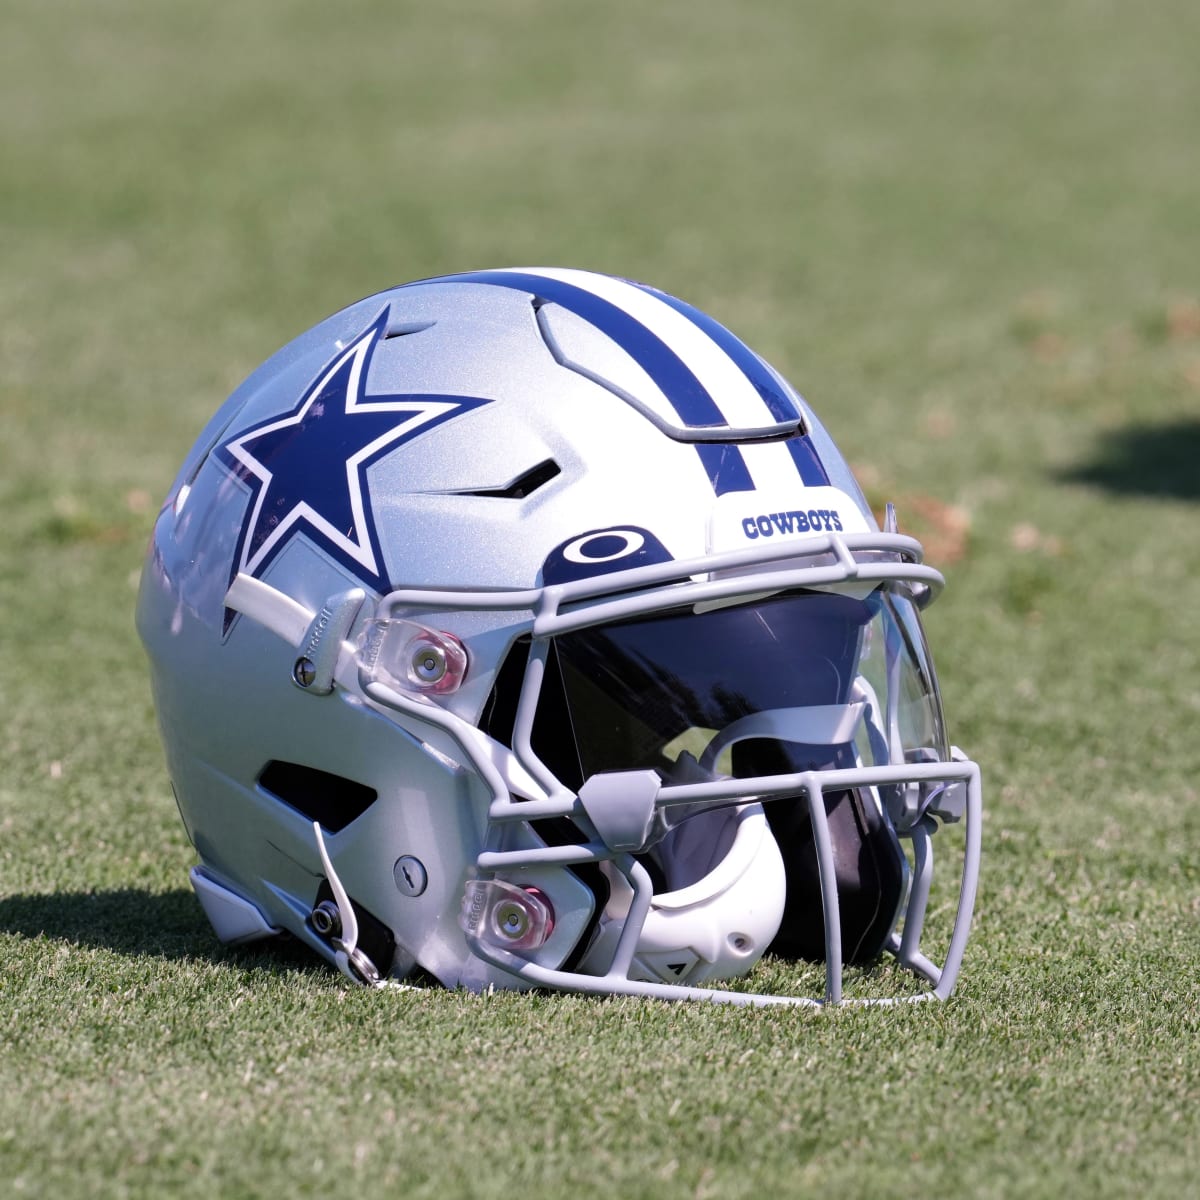 Dallas Cowboys bringing back throwback uniforms and white helmets